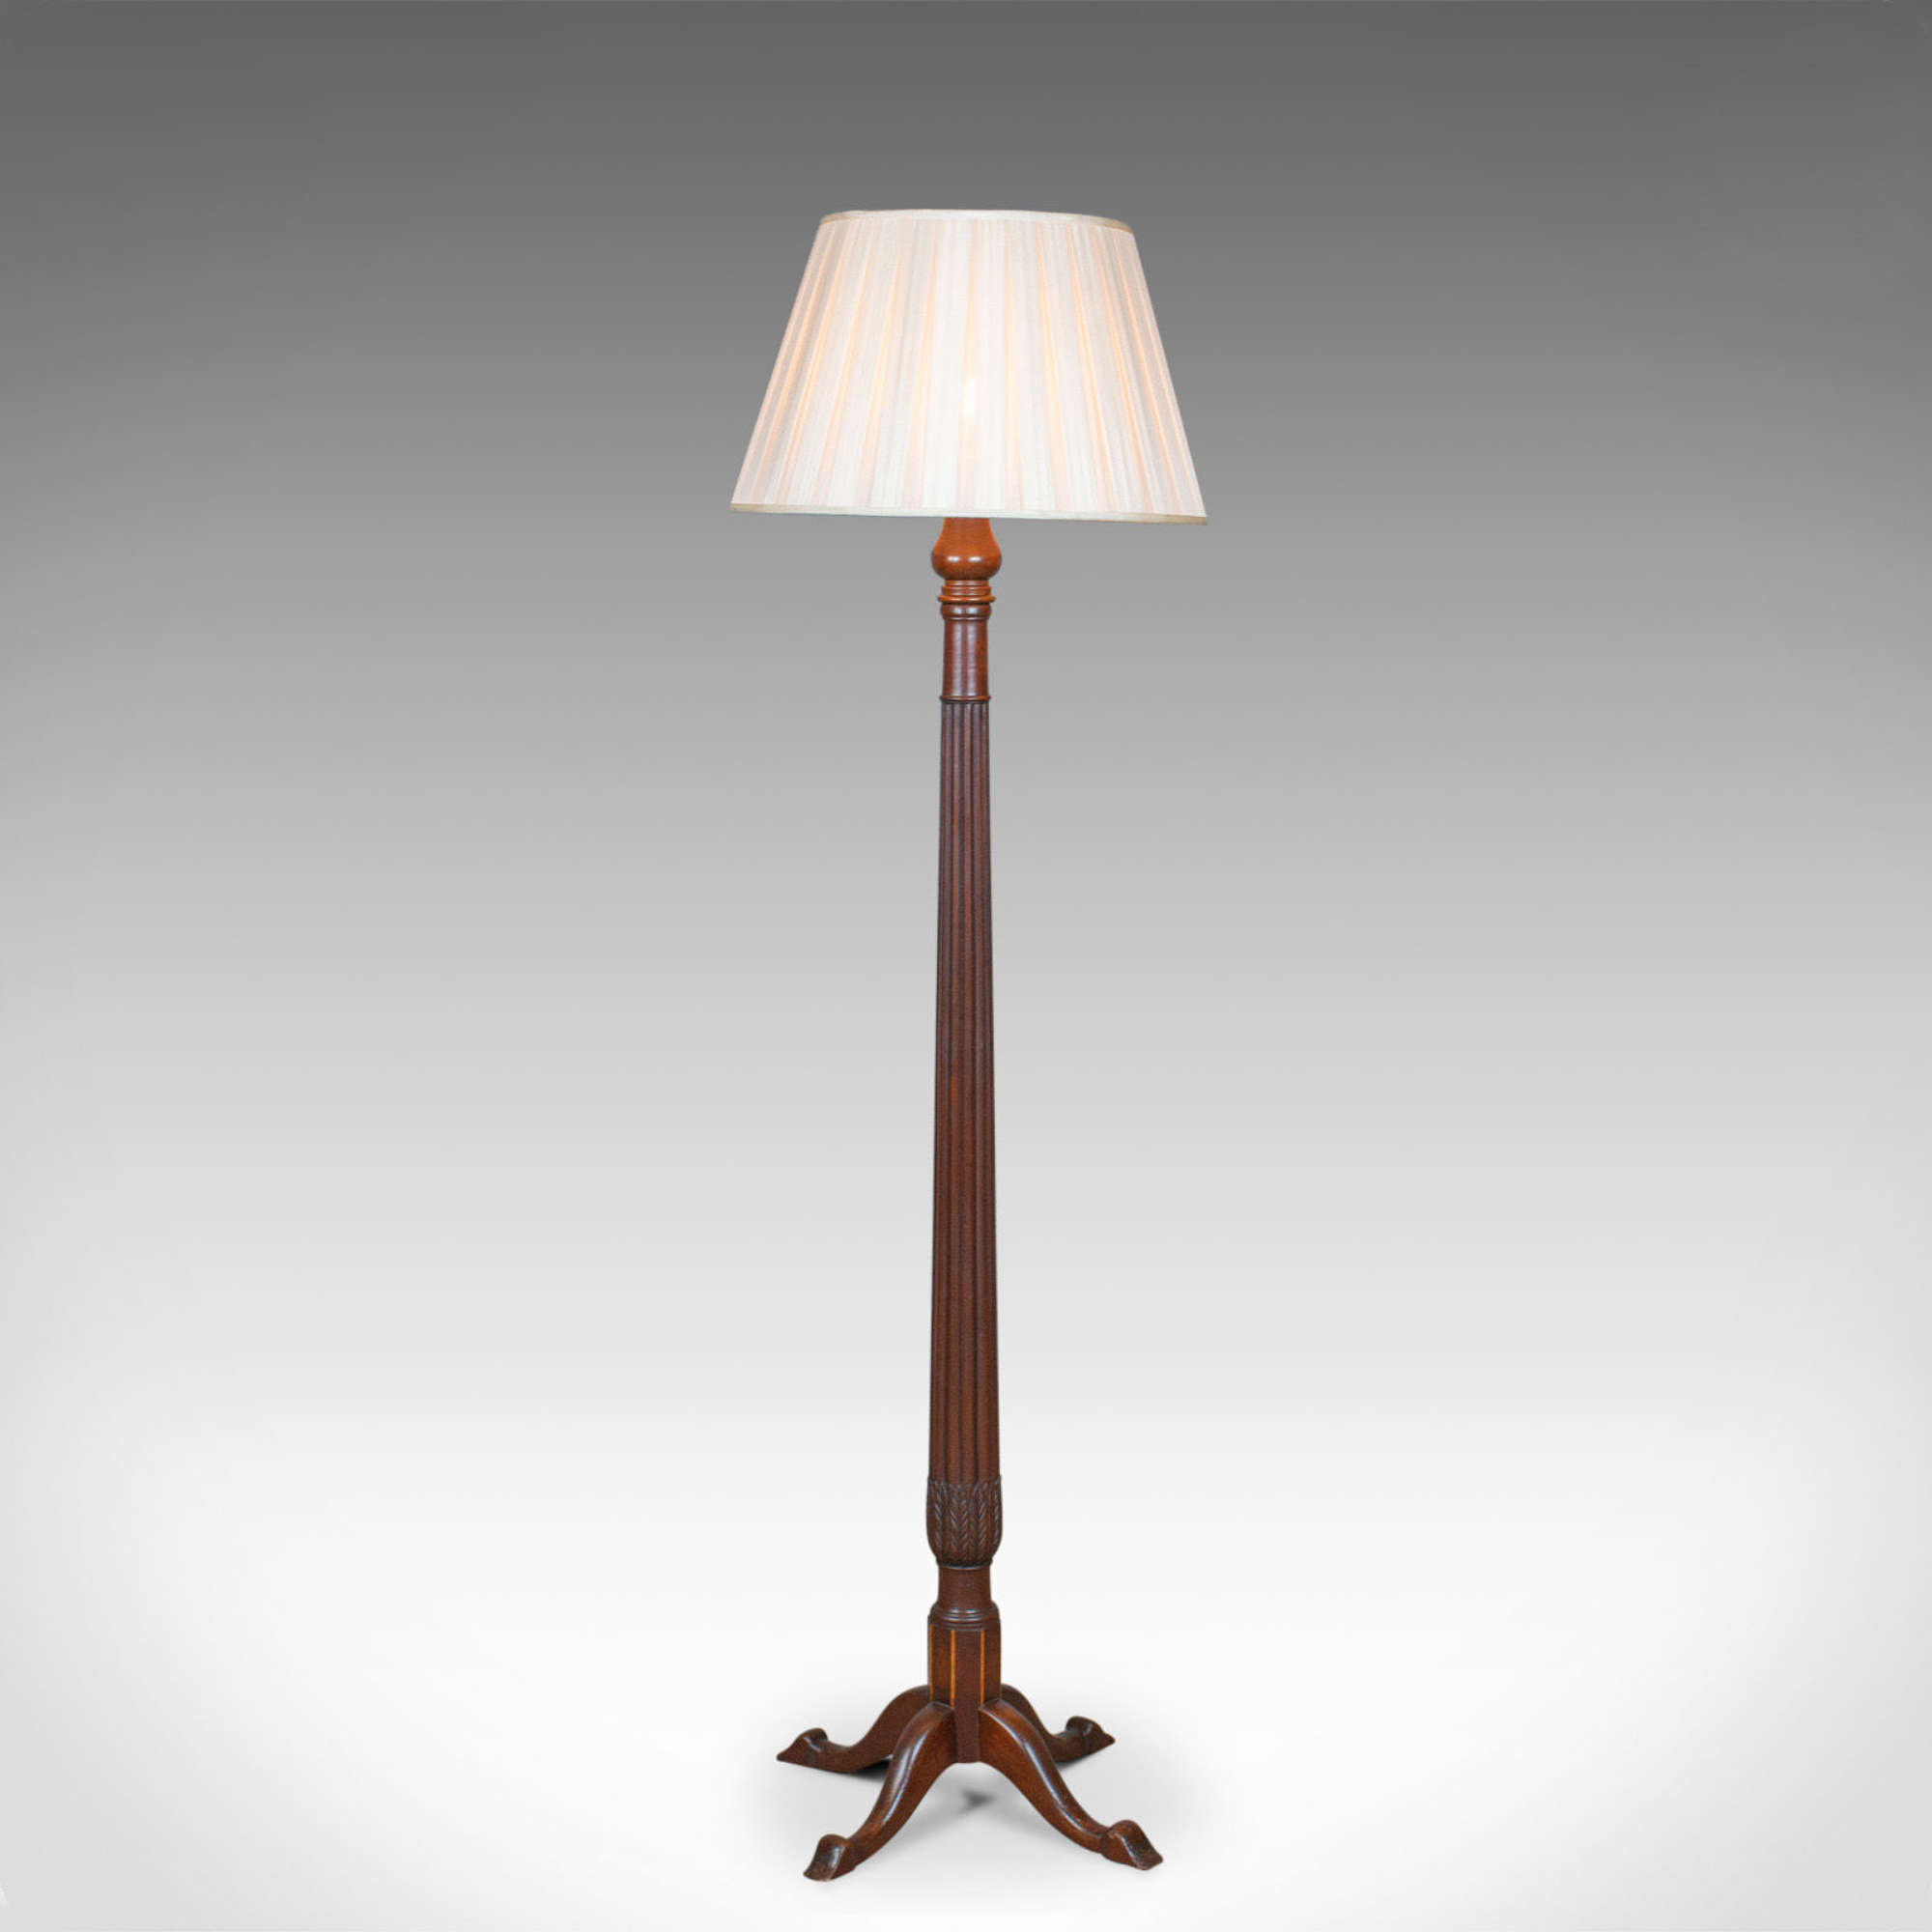 Antique Standard Lamp, English, Edwardian, William IV Bedpost Light c.1910